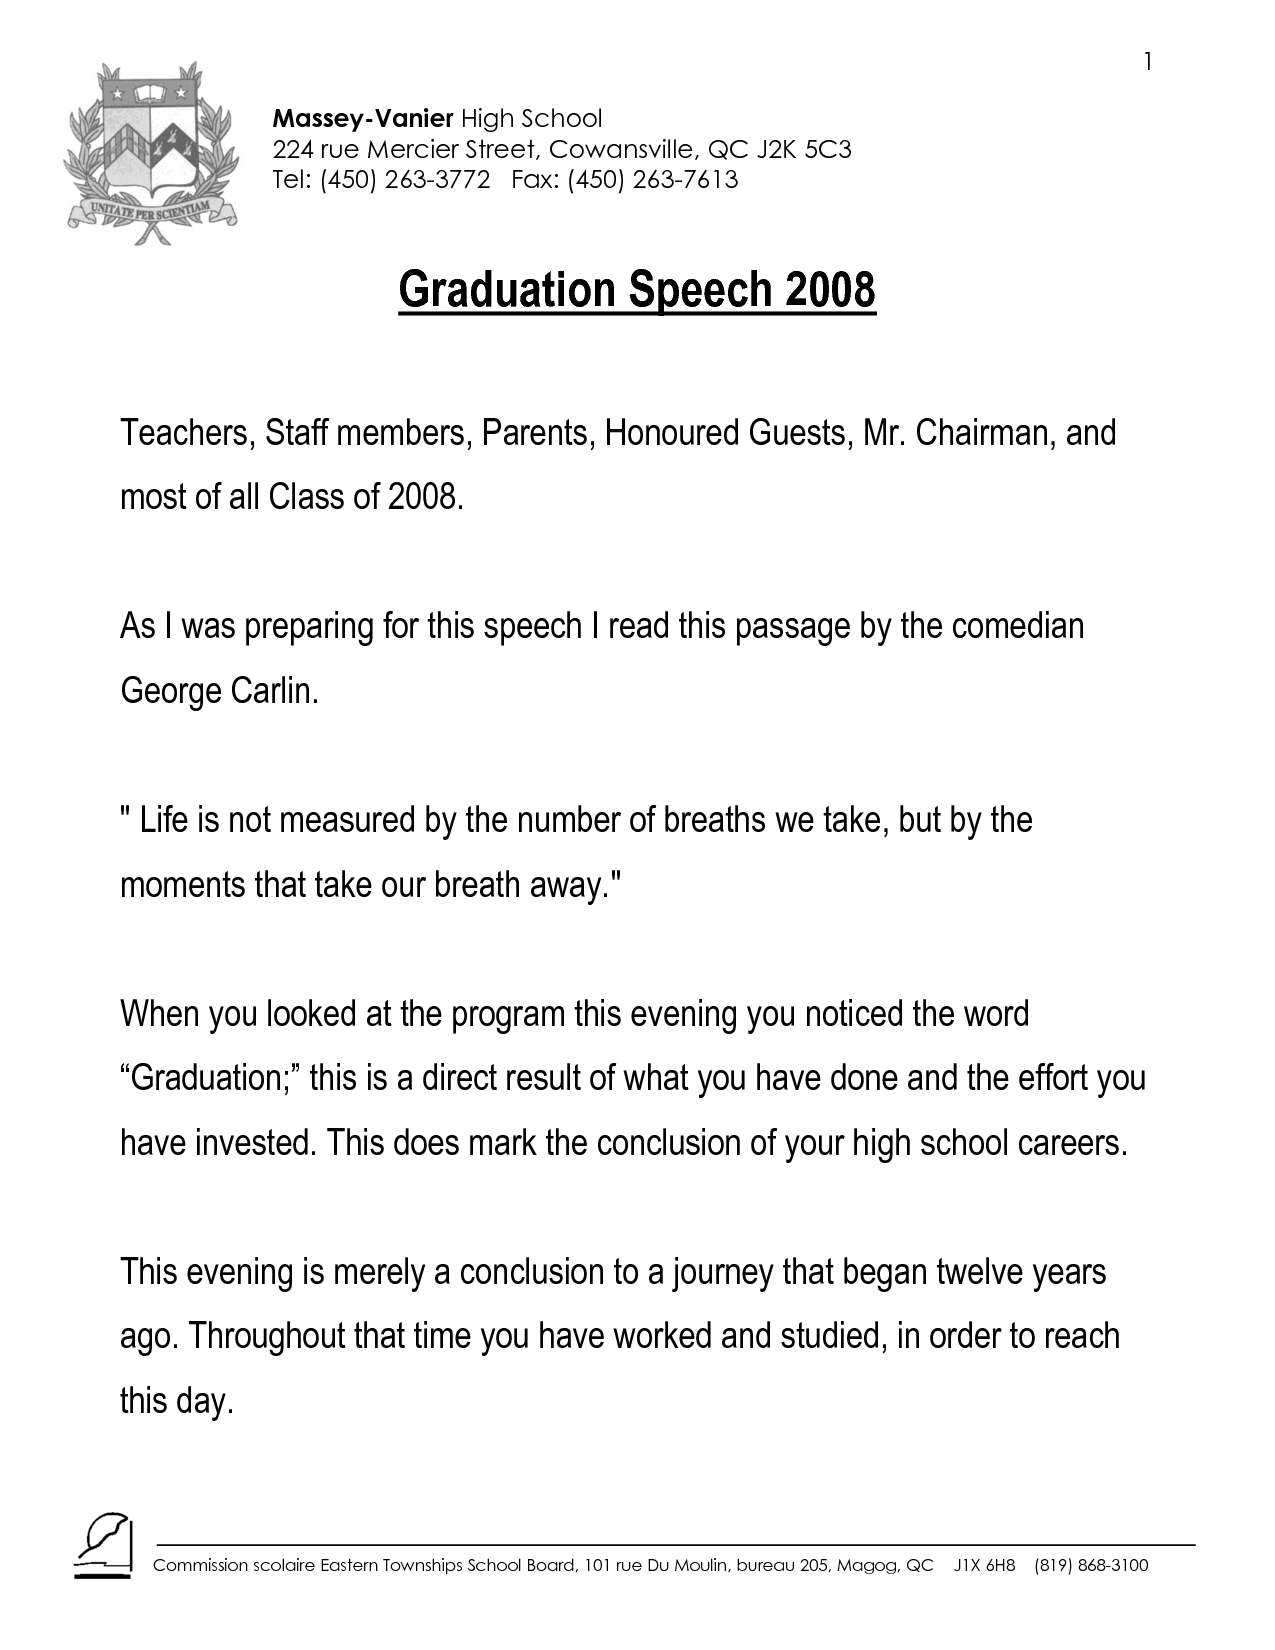 graduation speech for elementary school students